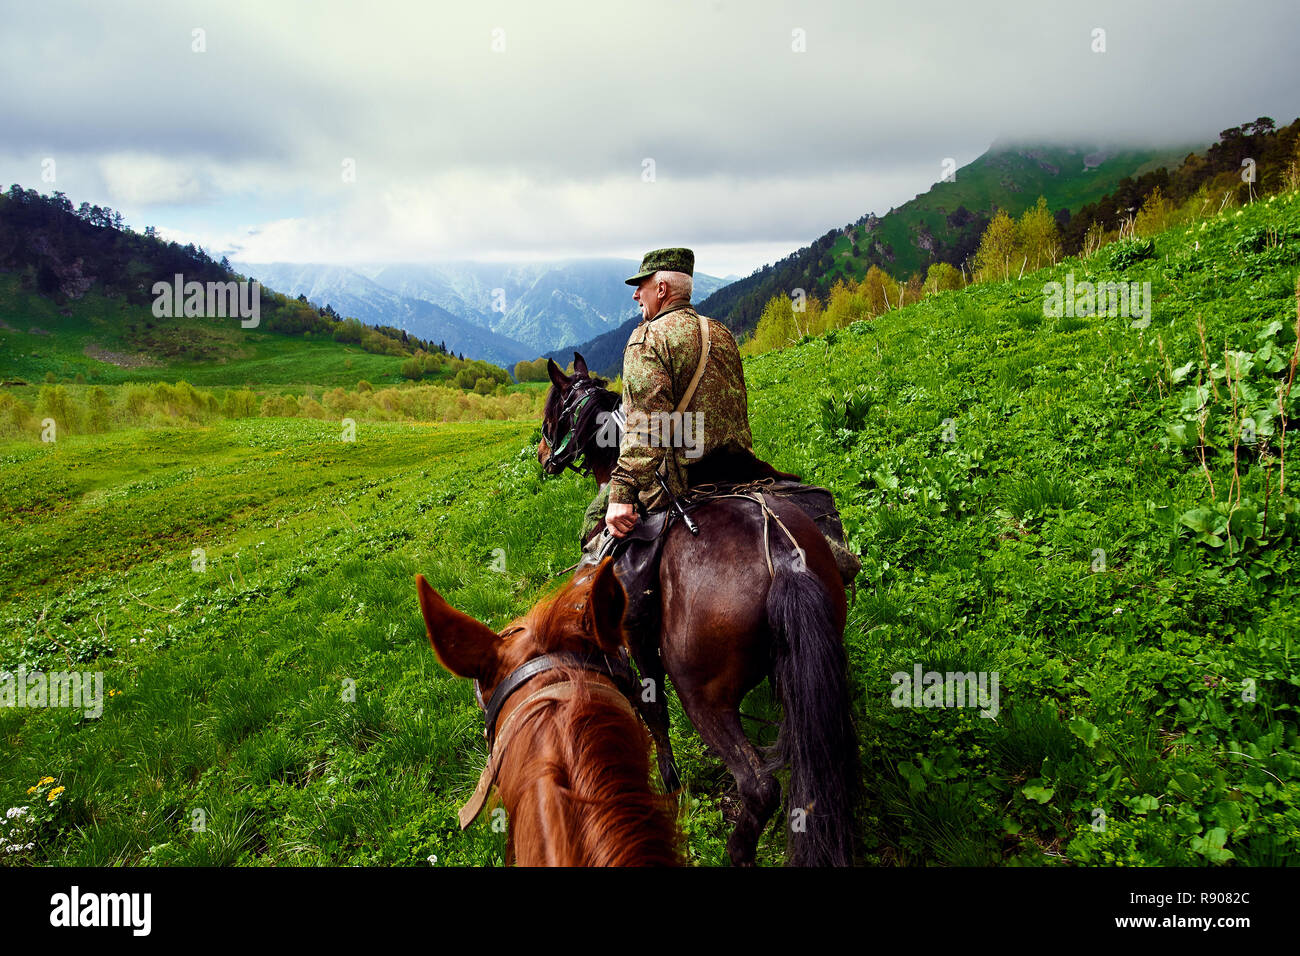 Krasnodar, RUSSIA - July 17, 2015: Huntsman is a horse in the mountains. Stock Photo